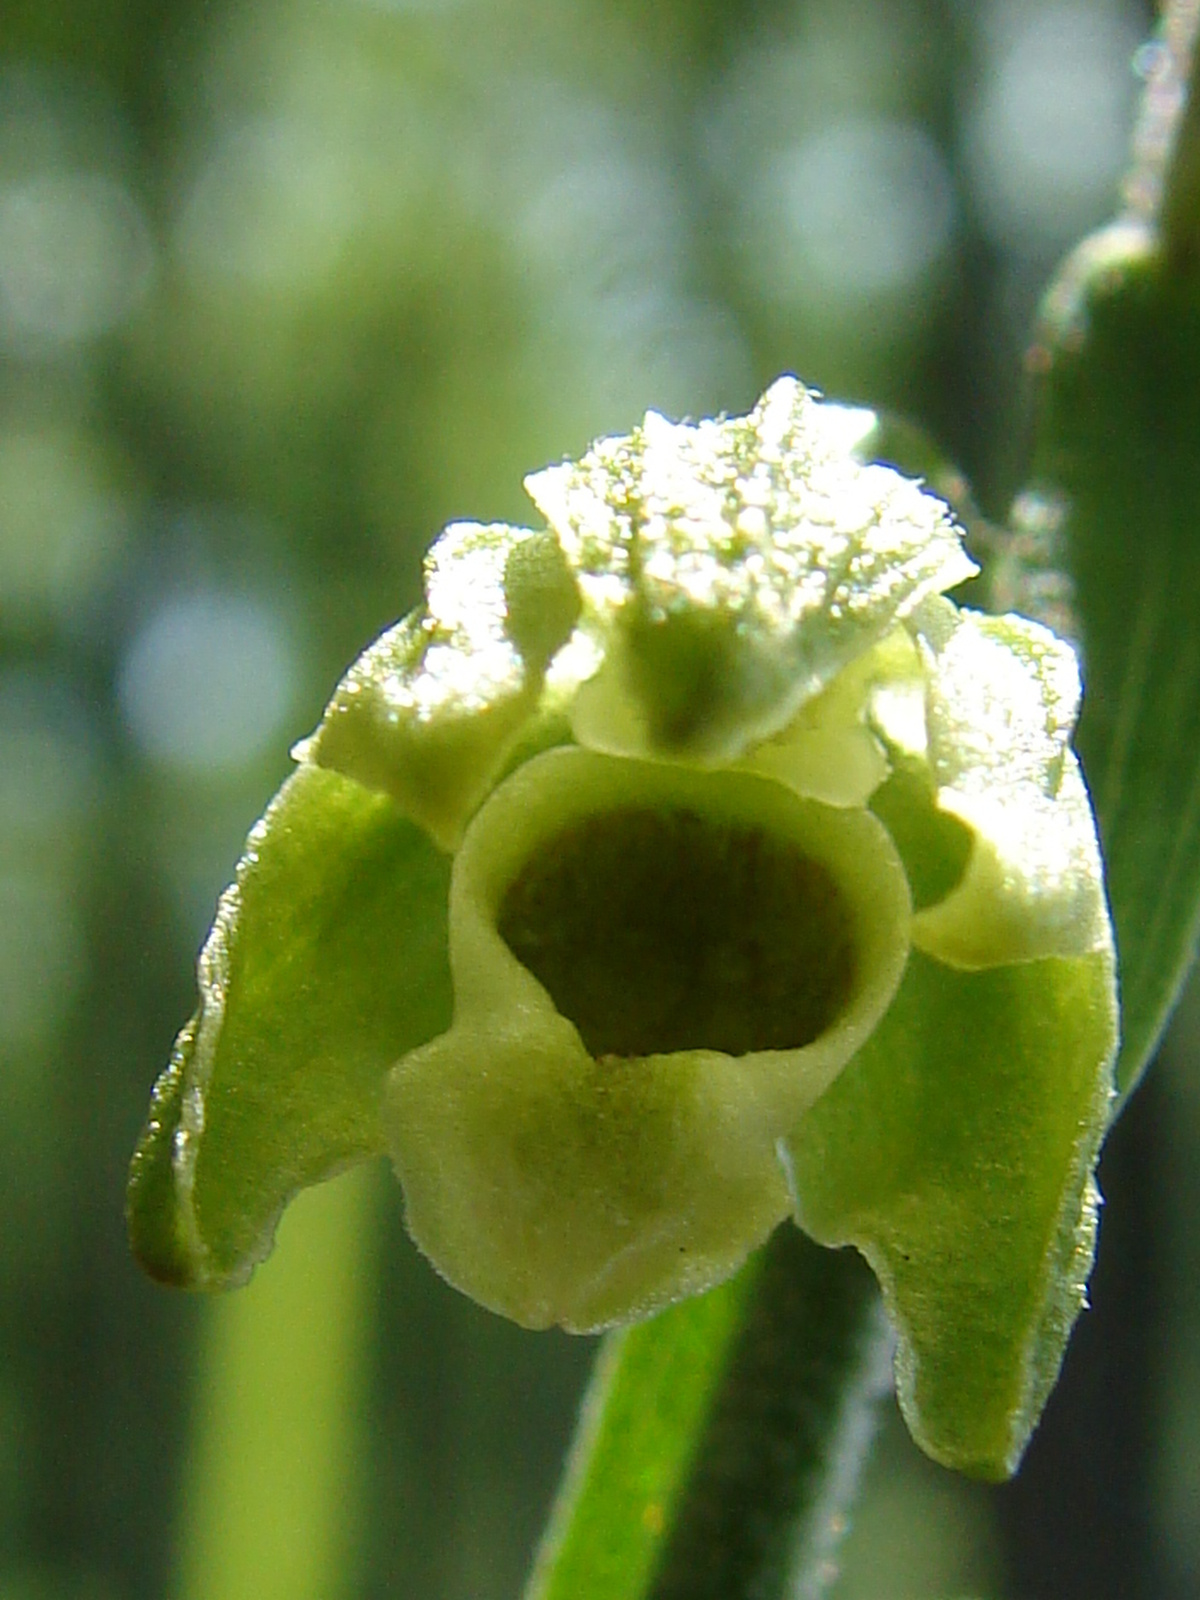 Pontuszi nöszőfű (Epipactis pontica)